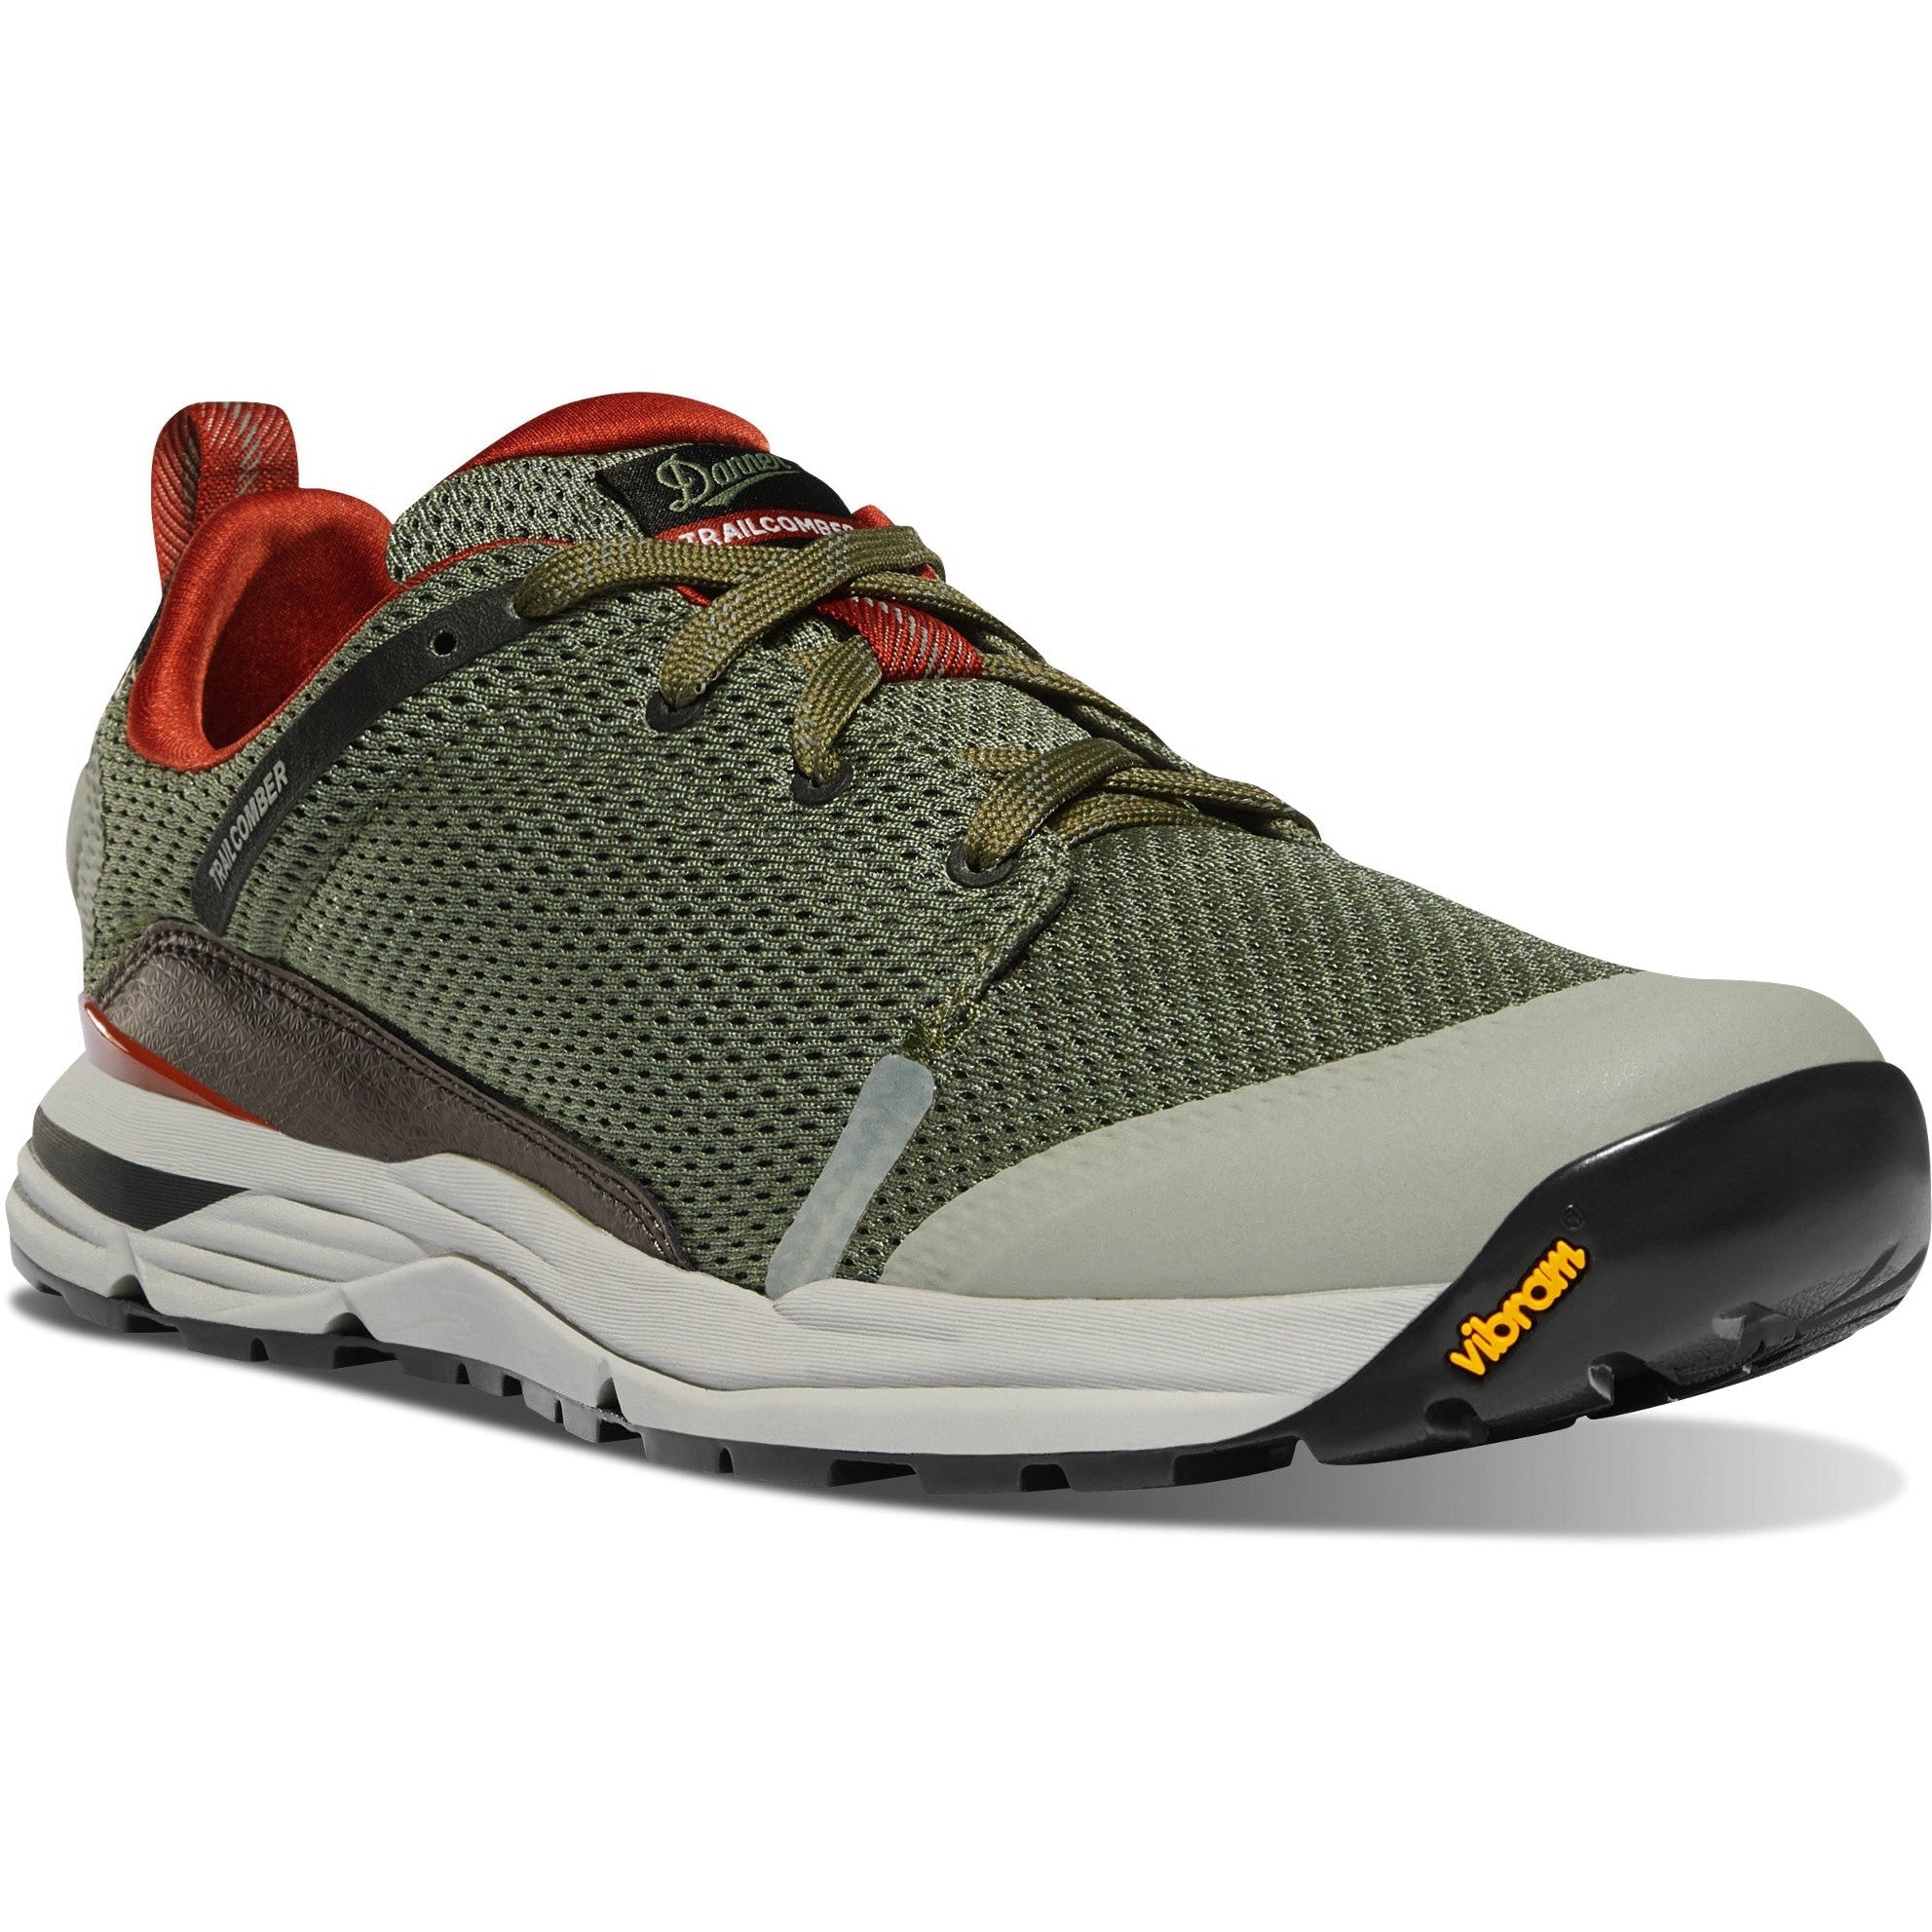 Danner Men's Trailcomber 3" Hiking Shoe - Lichen/Picante - 63351 7 / Medium / Green - Overlook Boots